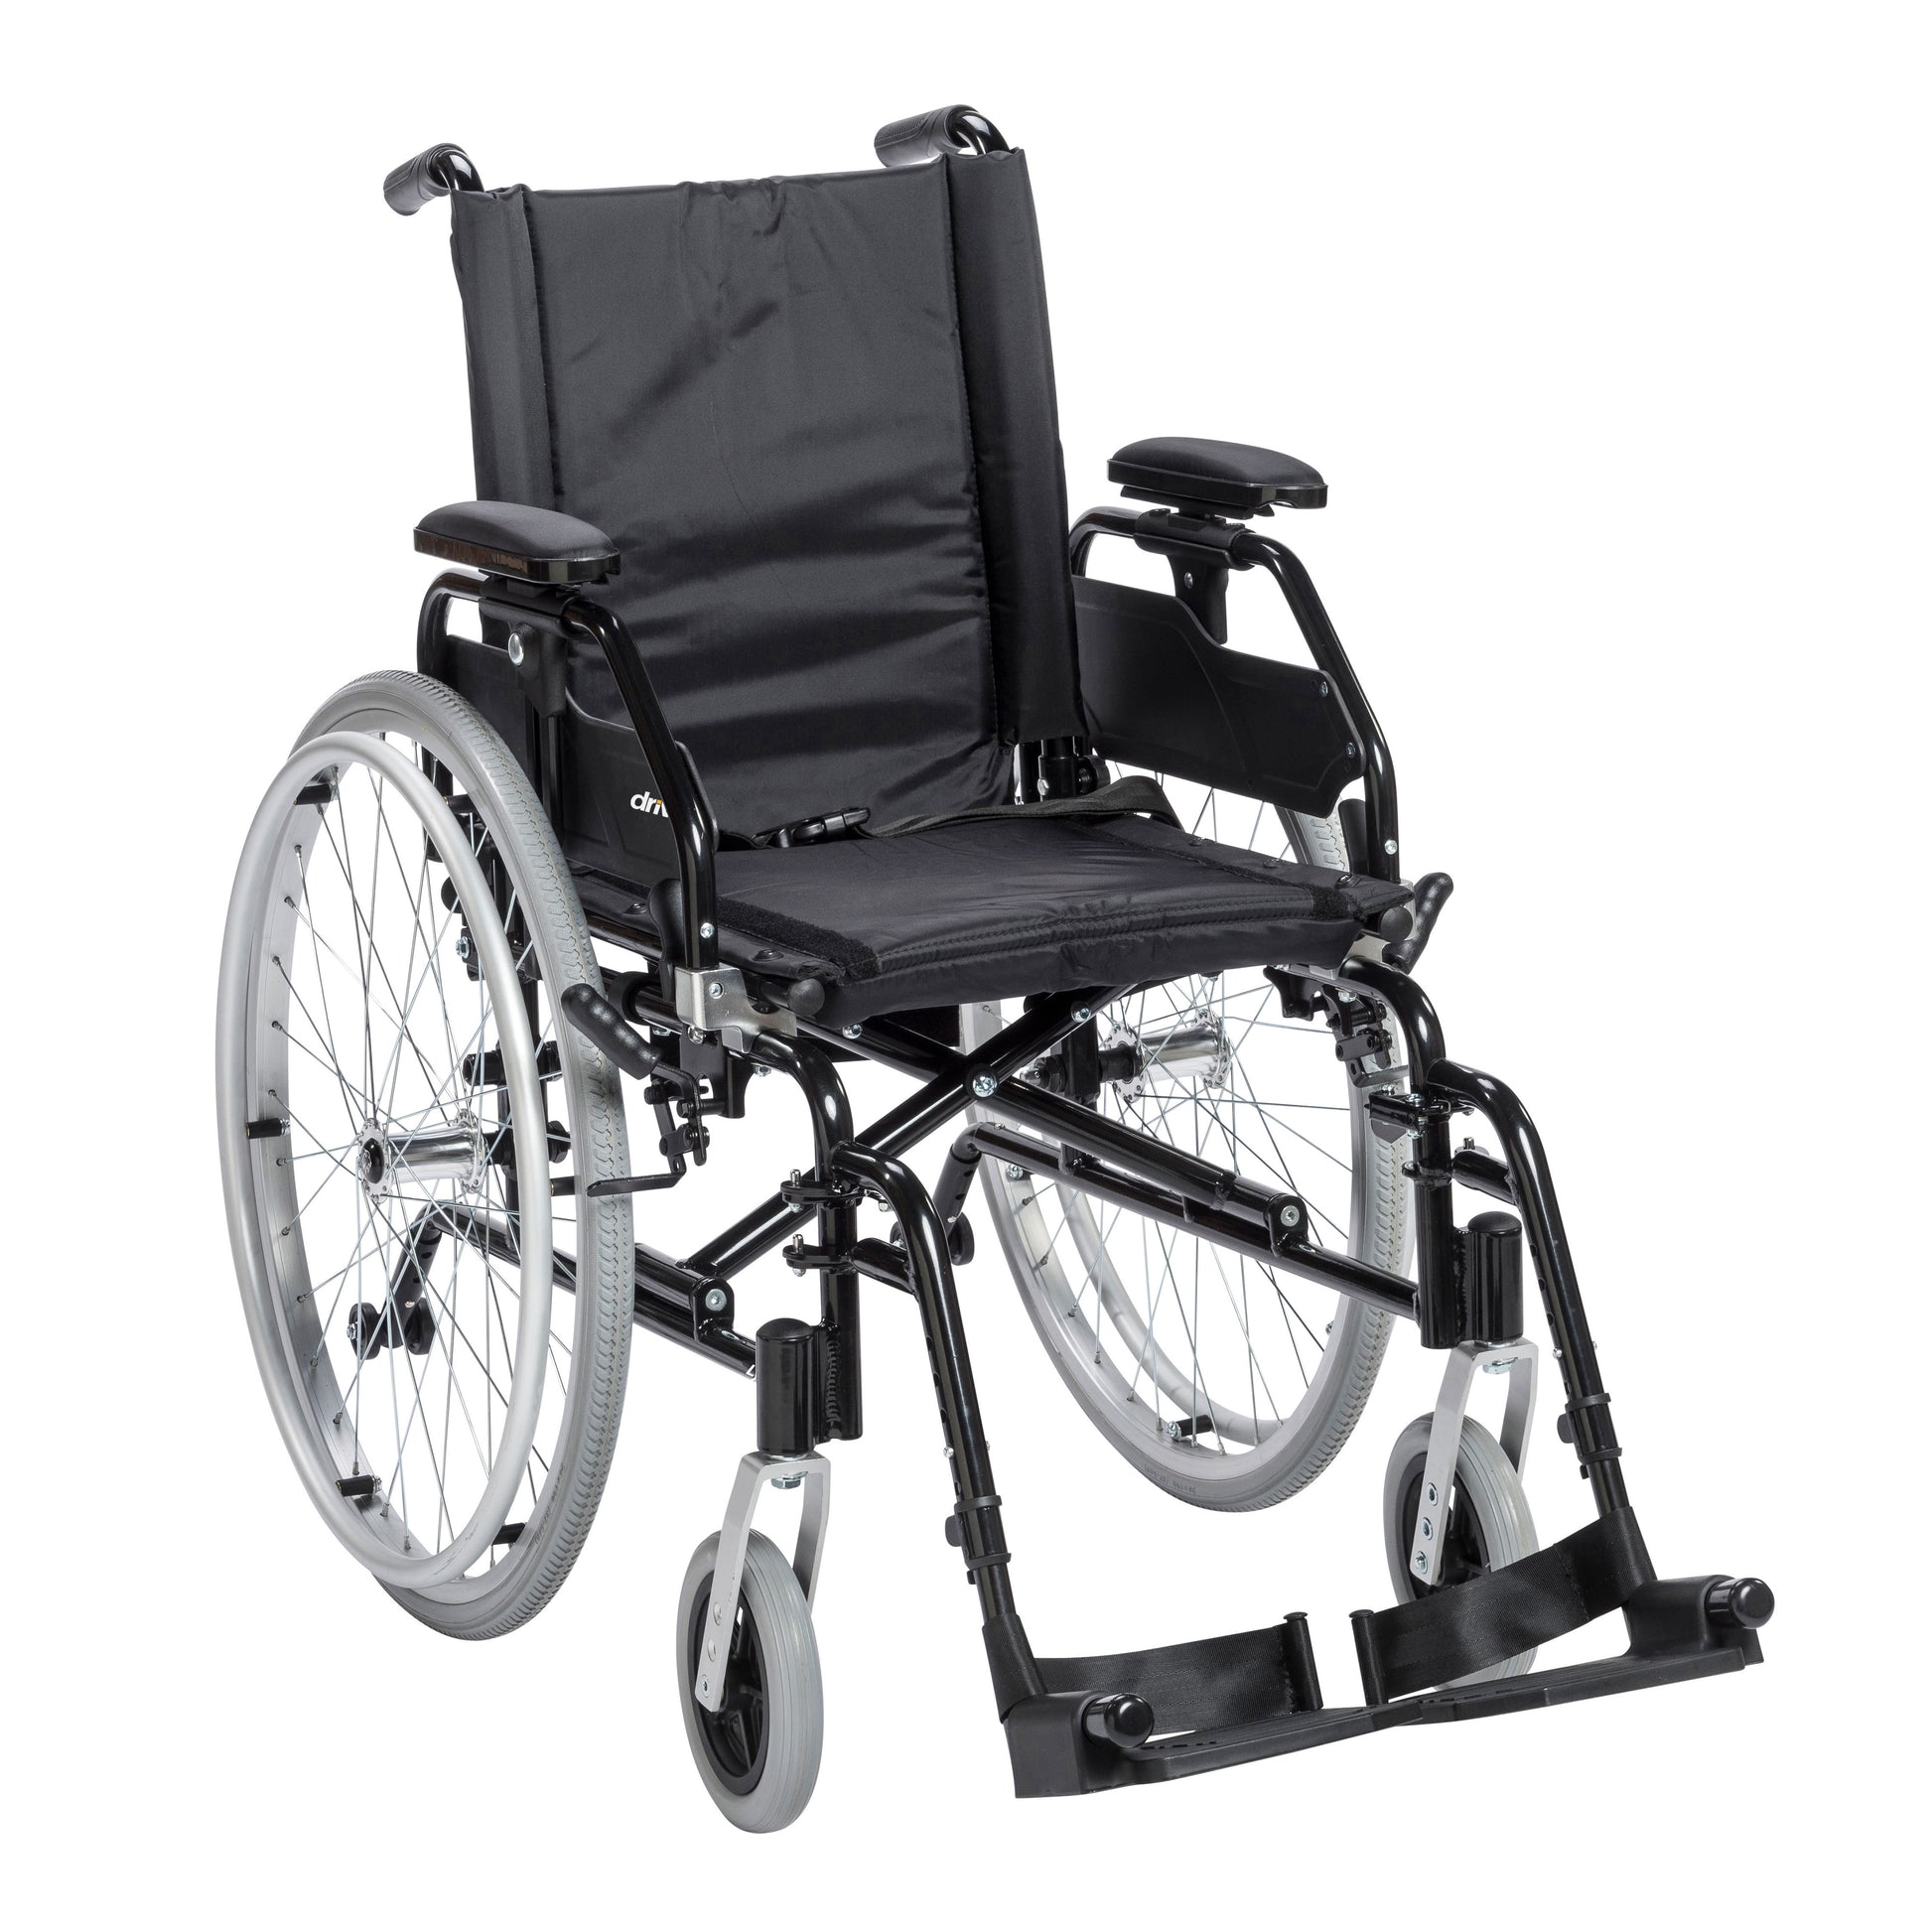 Lynx Ultra Lightweight Wheelchair, Swing away Footrests, 16" Seat